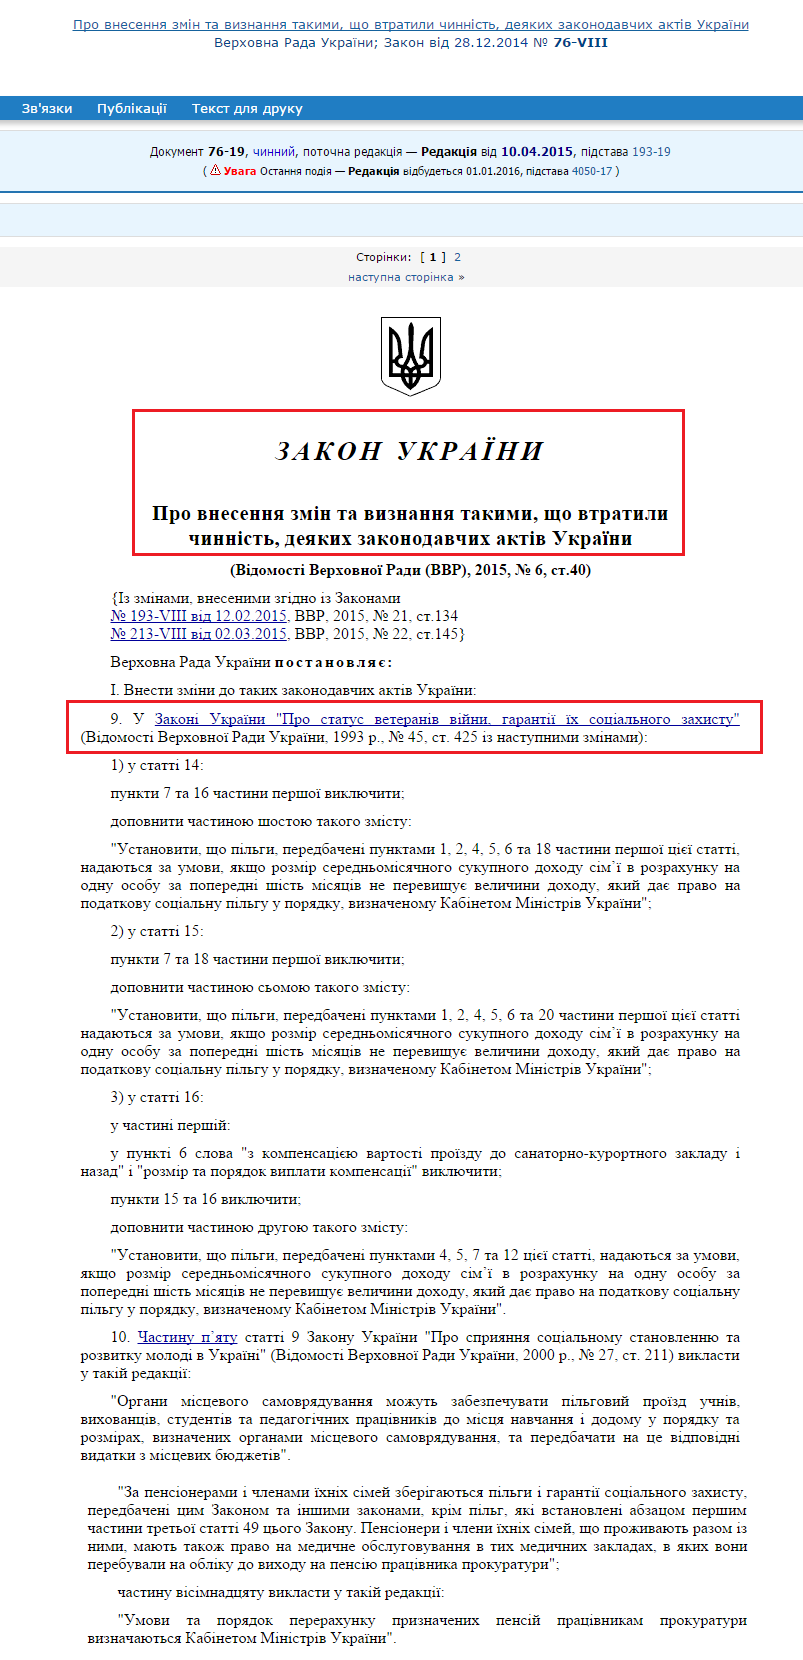 http://zakon4.rada.gov.ua/laws/show/76-19/print1411678714863849